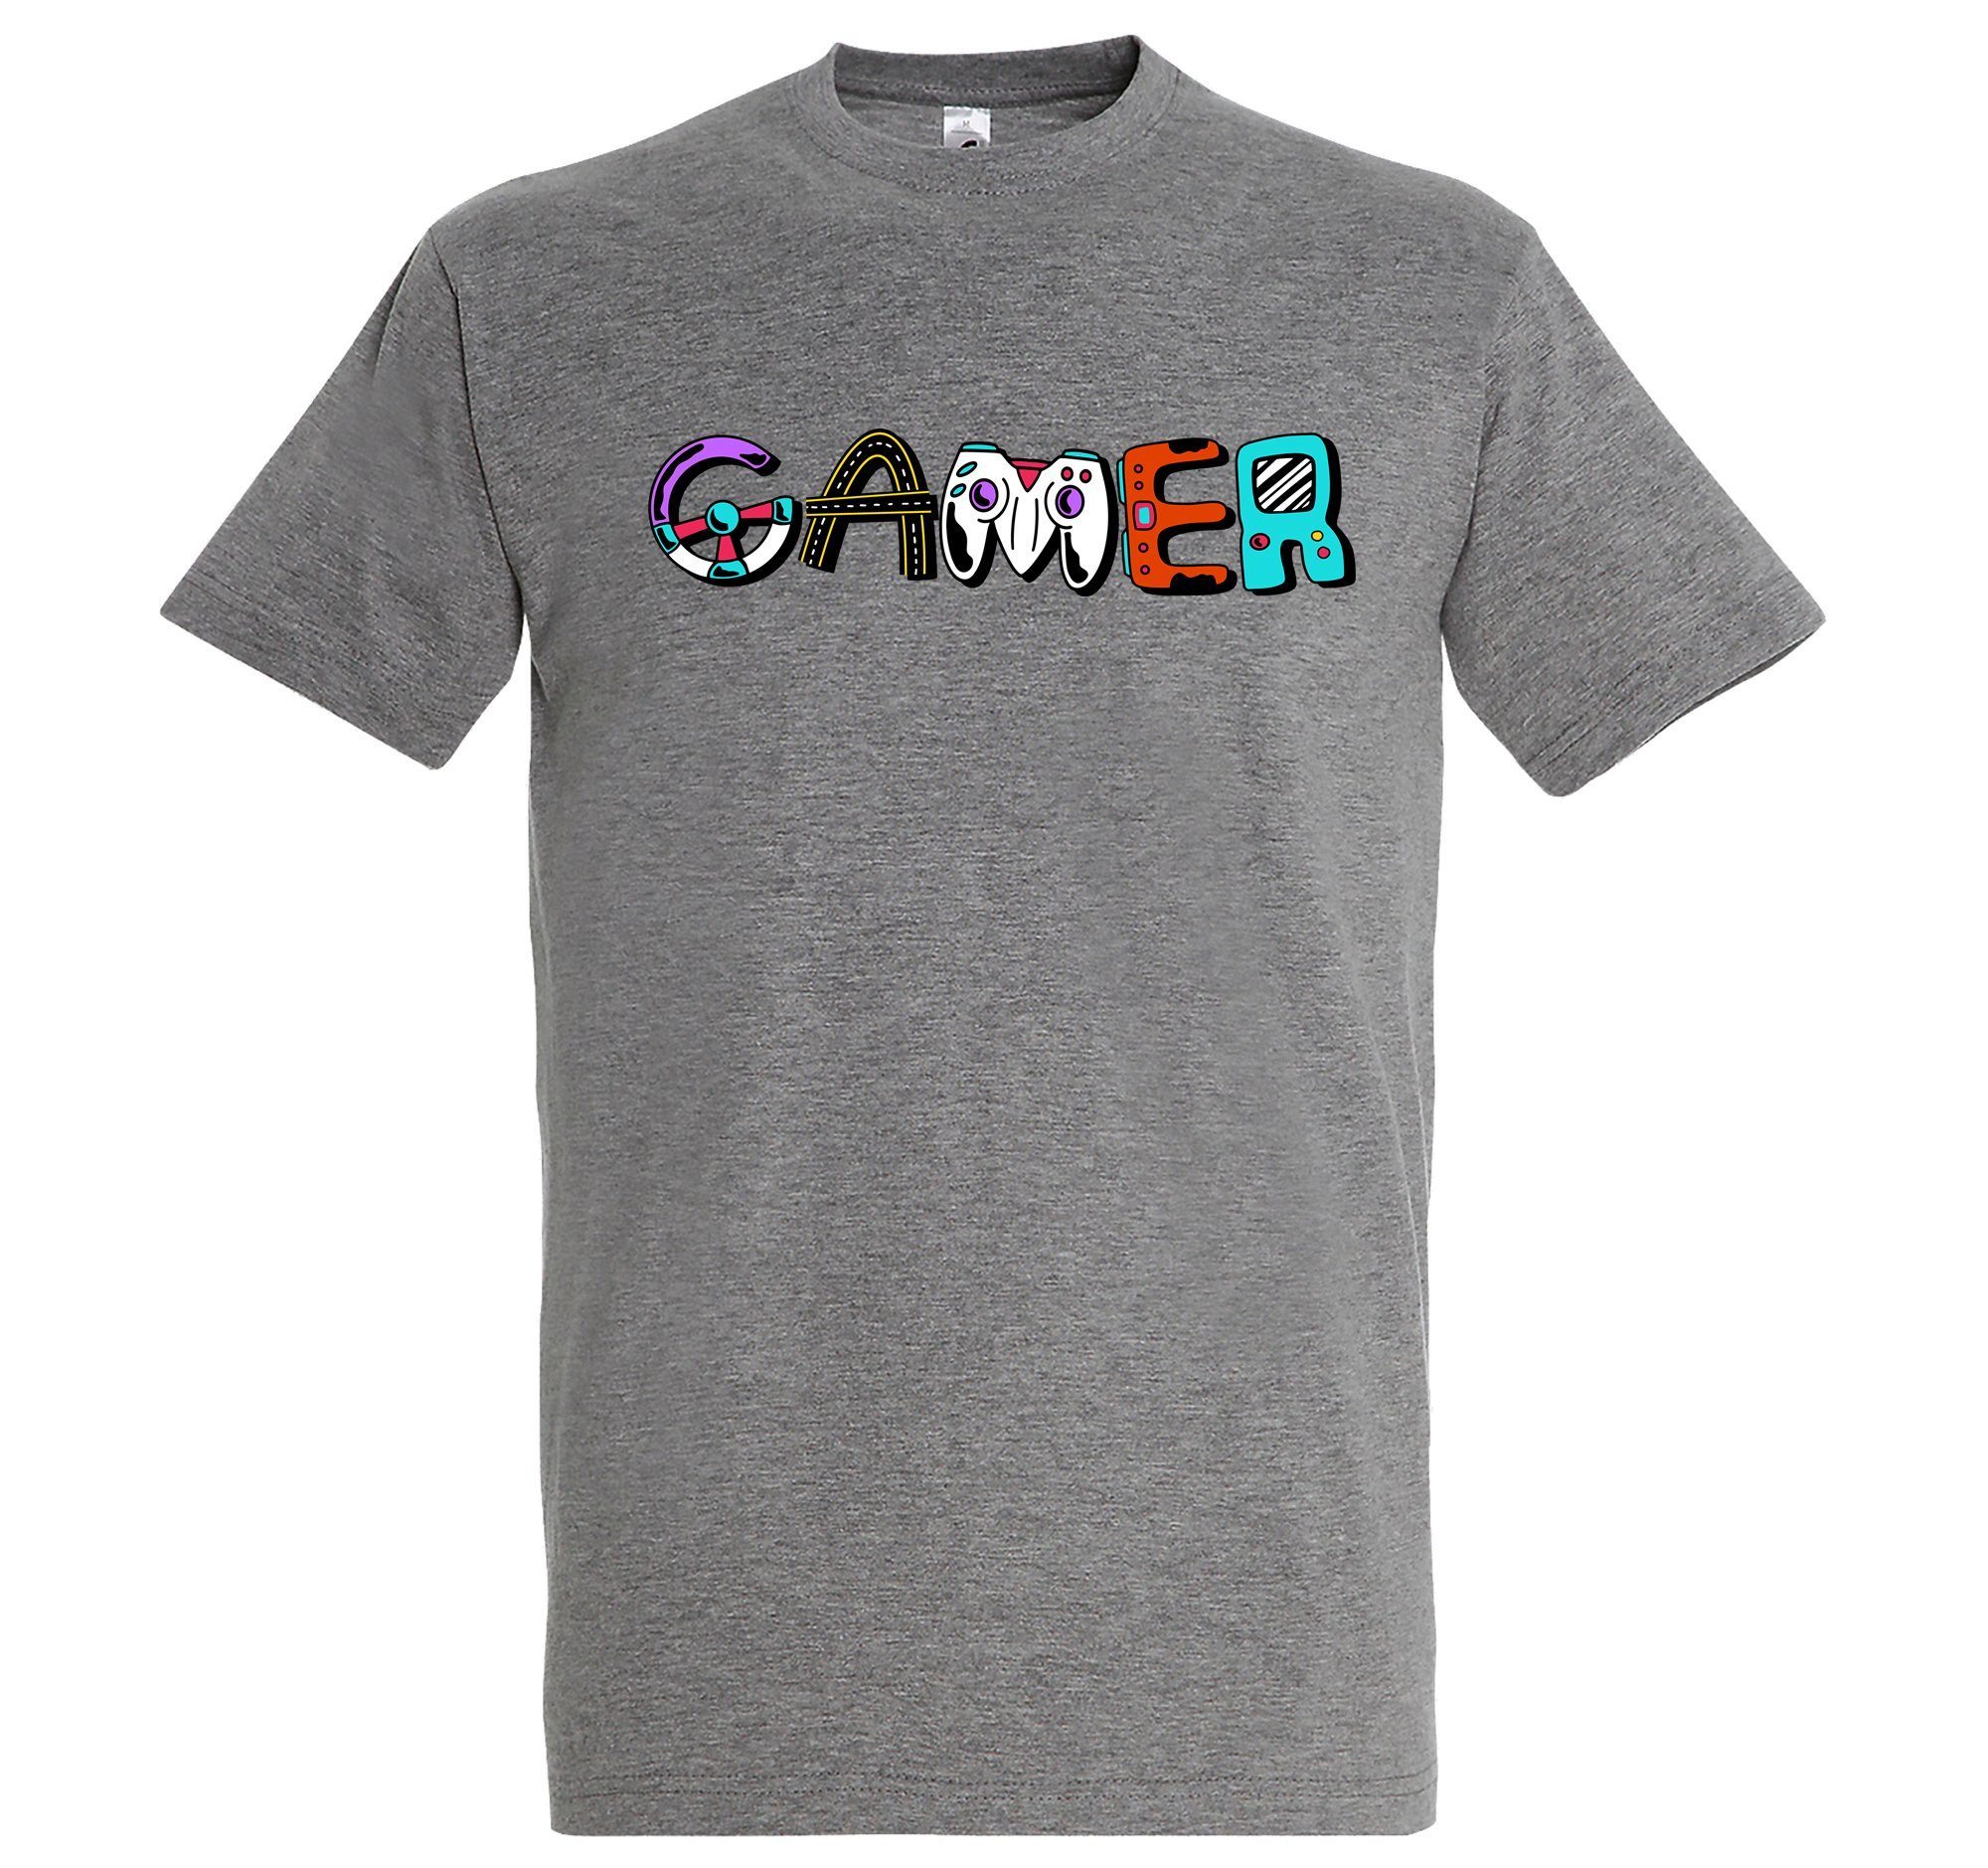 Grau trendigem Herren T-Shirt Designz mit Shirt Gamer Frontprint Youth